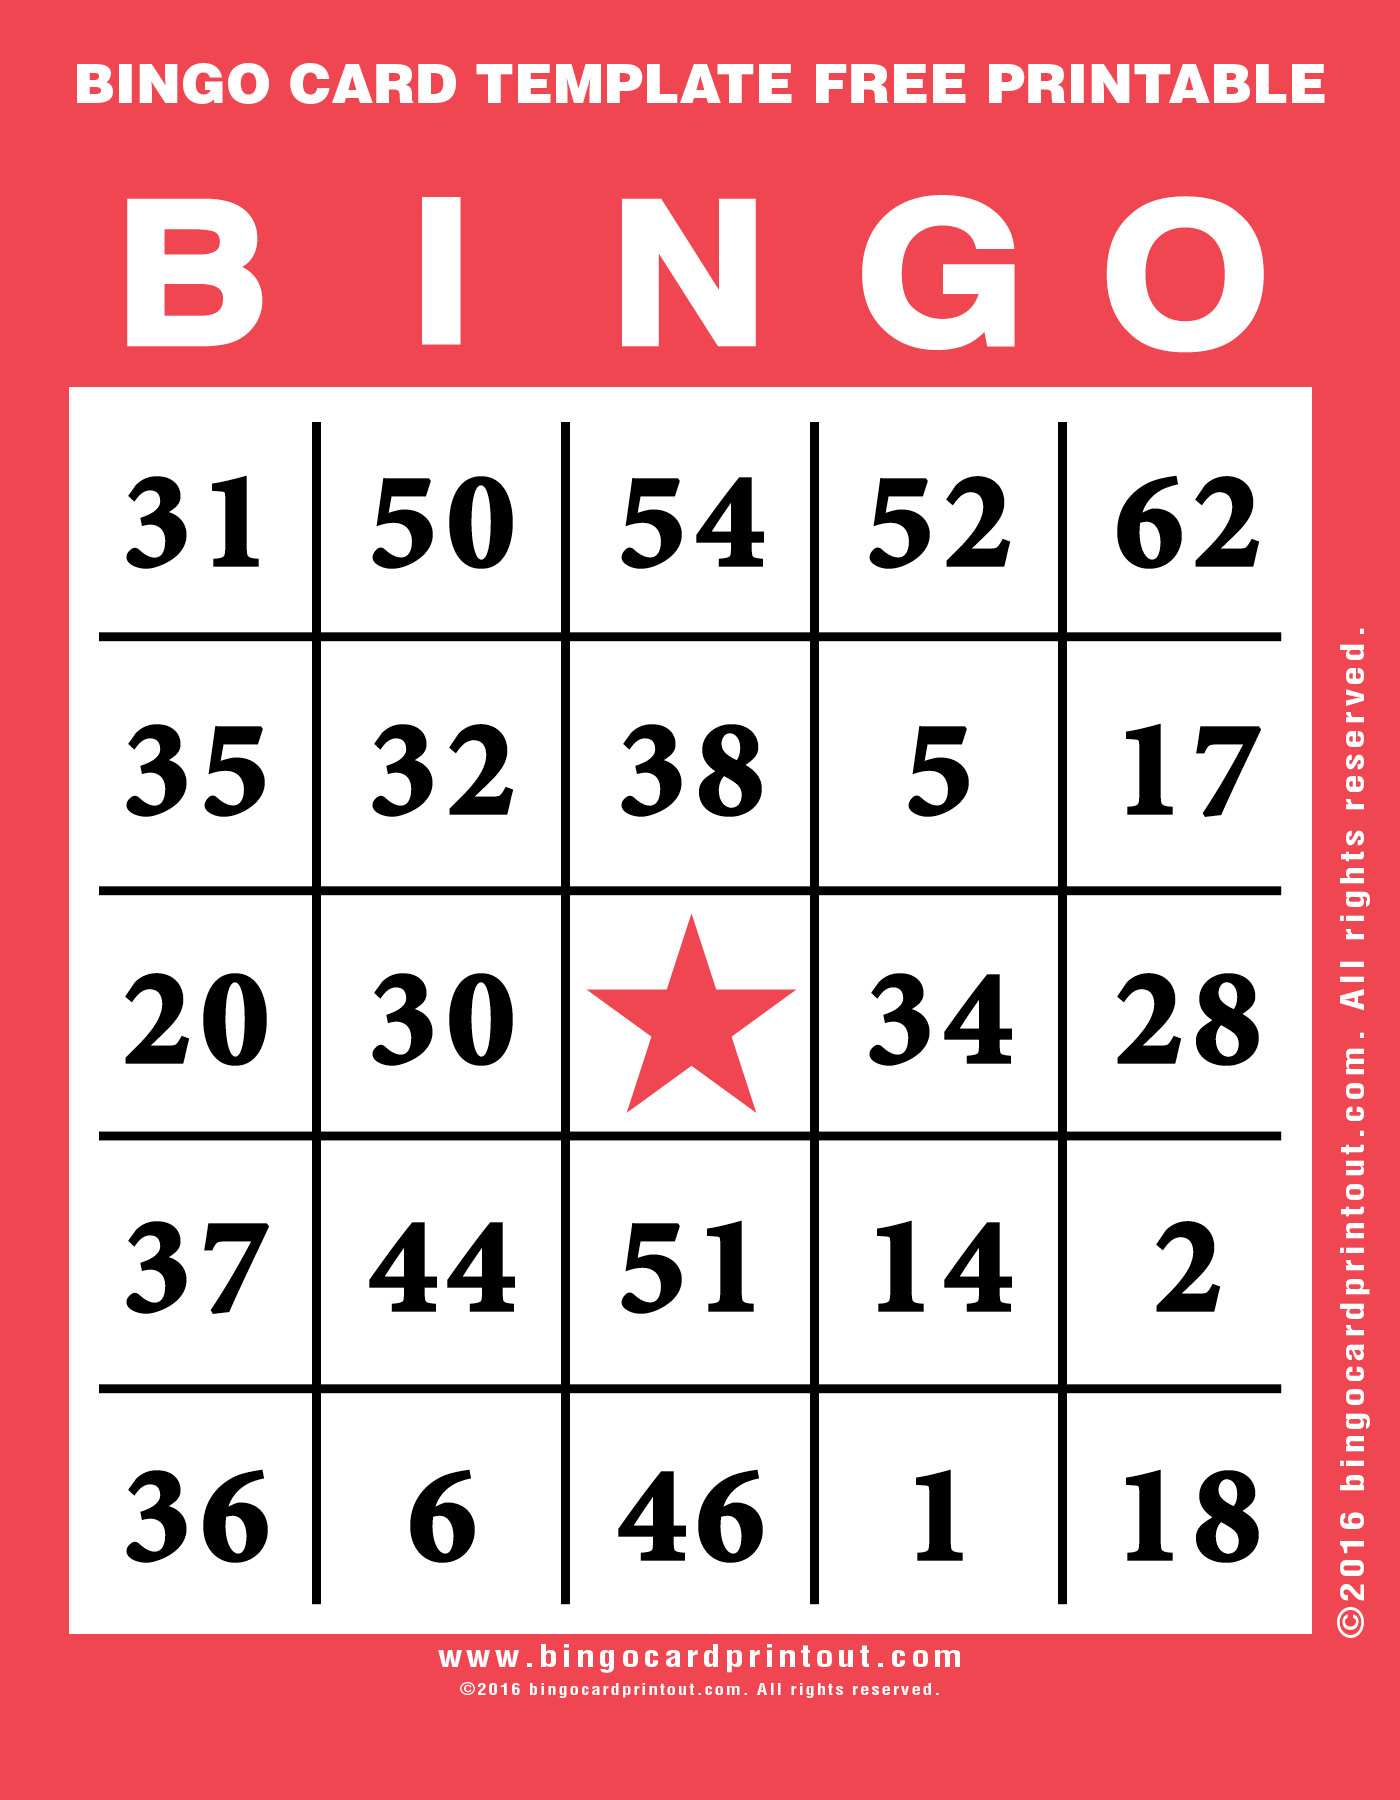 Bingo Card Template Free Printable - Bingocardprintout - Printable Bingo Template Free